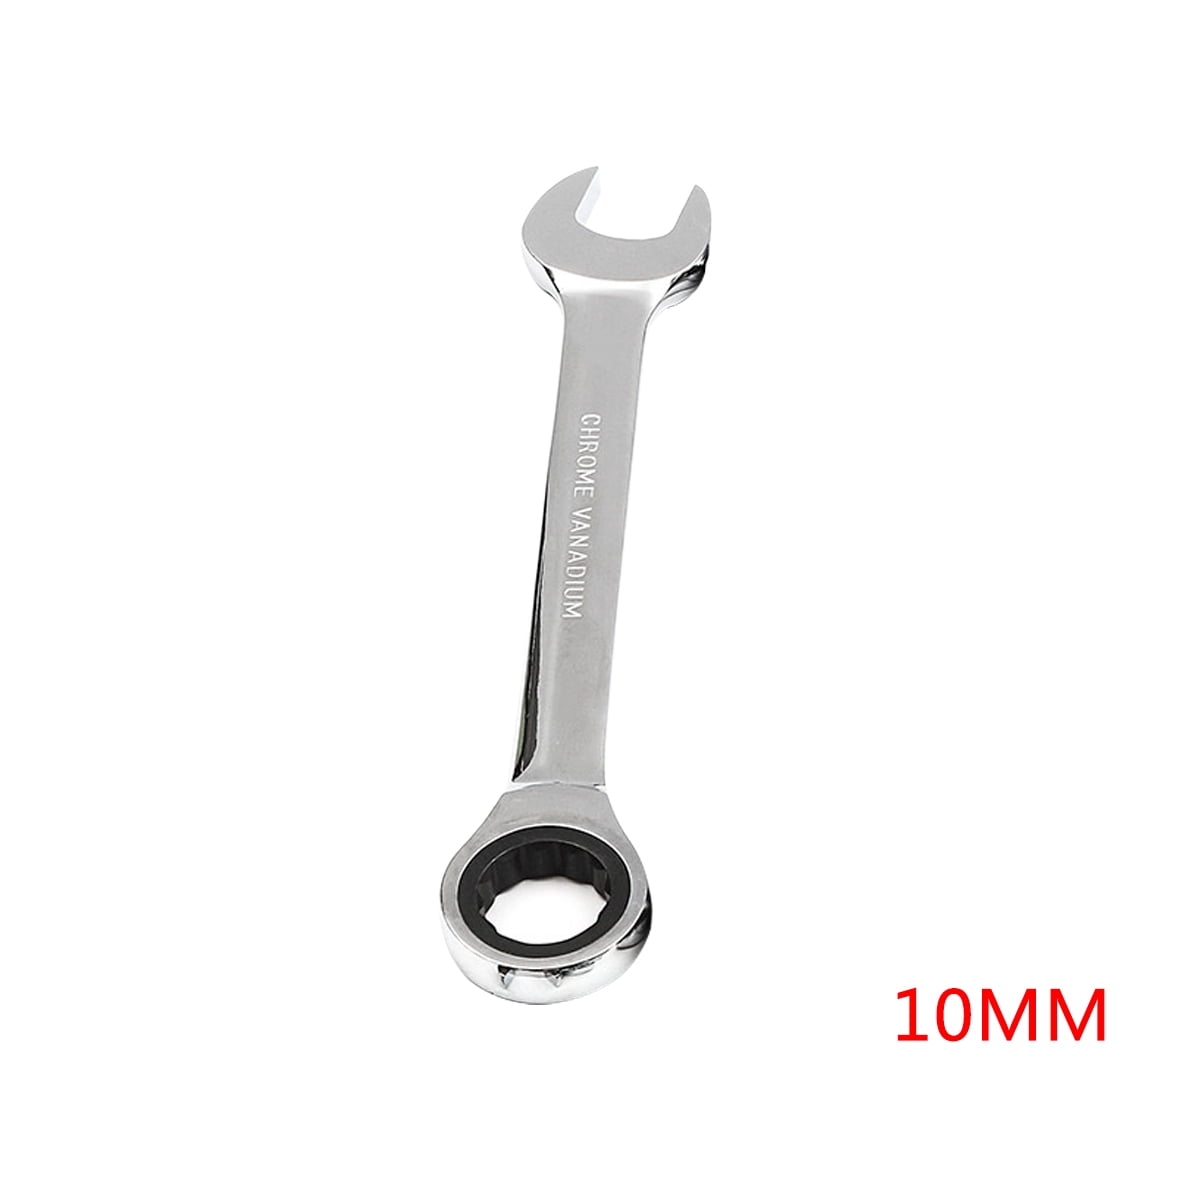 6-24mm Steel Flexible Head Ratchet Spanner Gear Wrench Open End & Ring 